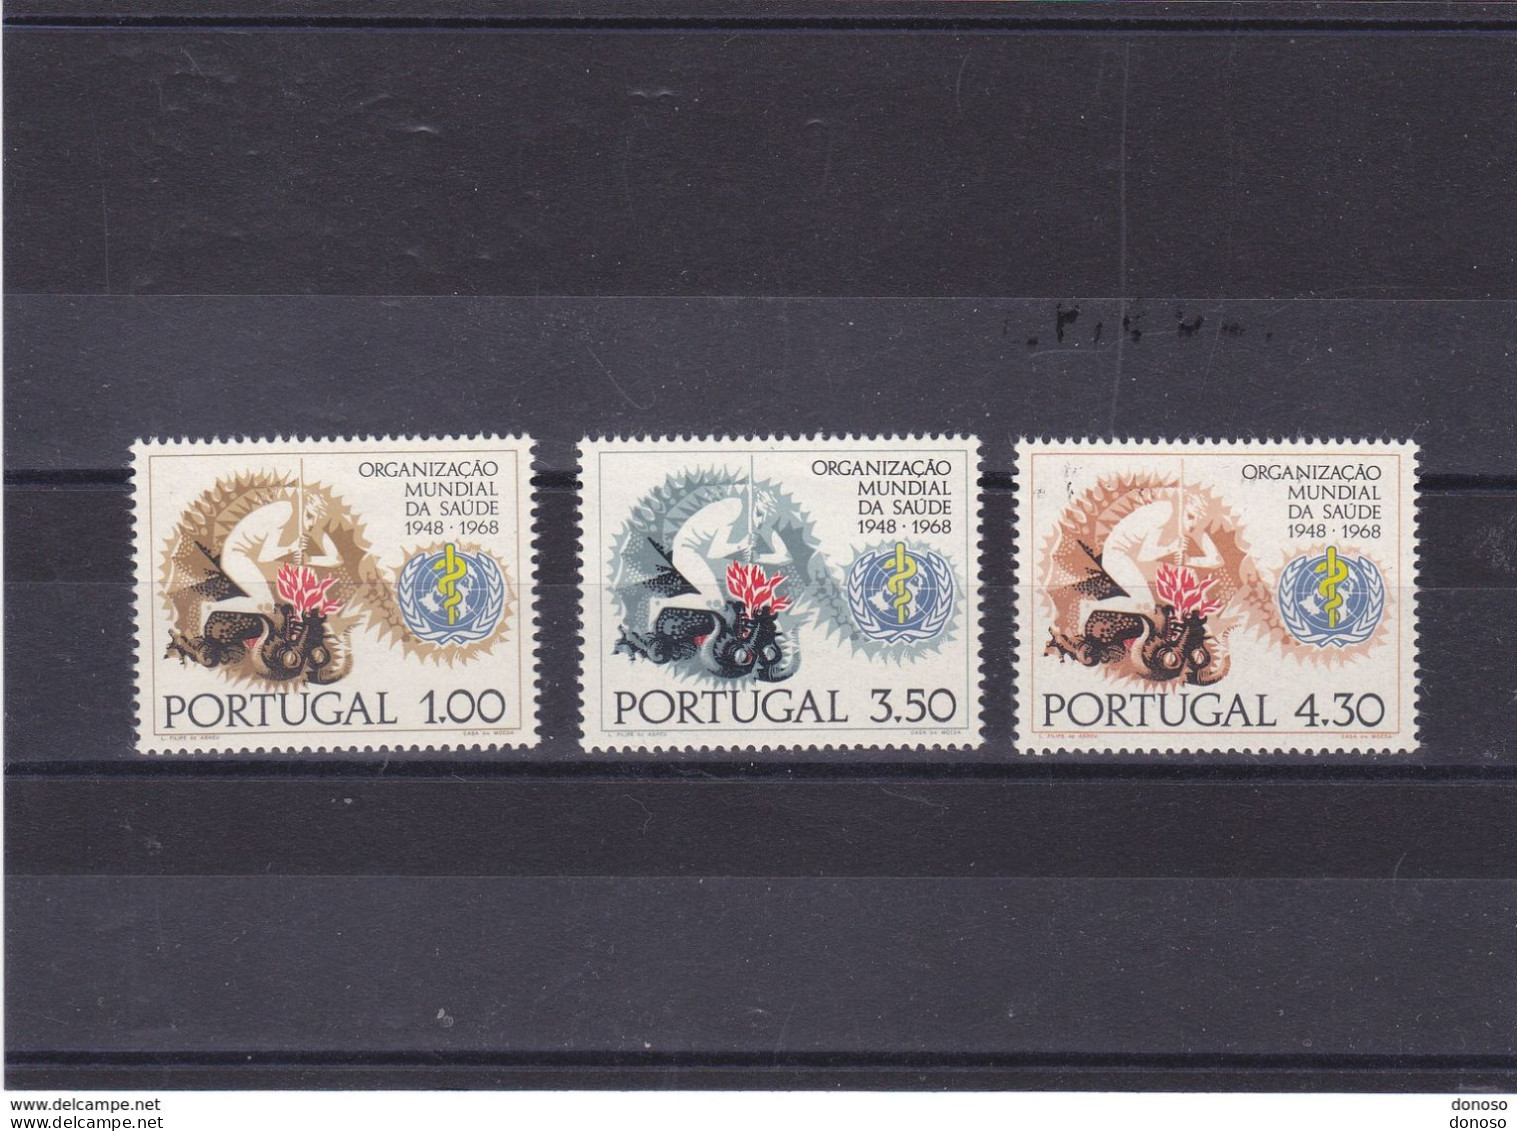 PORTUGAL 1968 OMS Yvert 1038-1040, Michel 1057-1059 NEUF** MNH Cote Yv 11 Euros - Nuovi